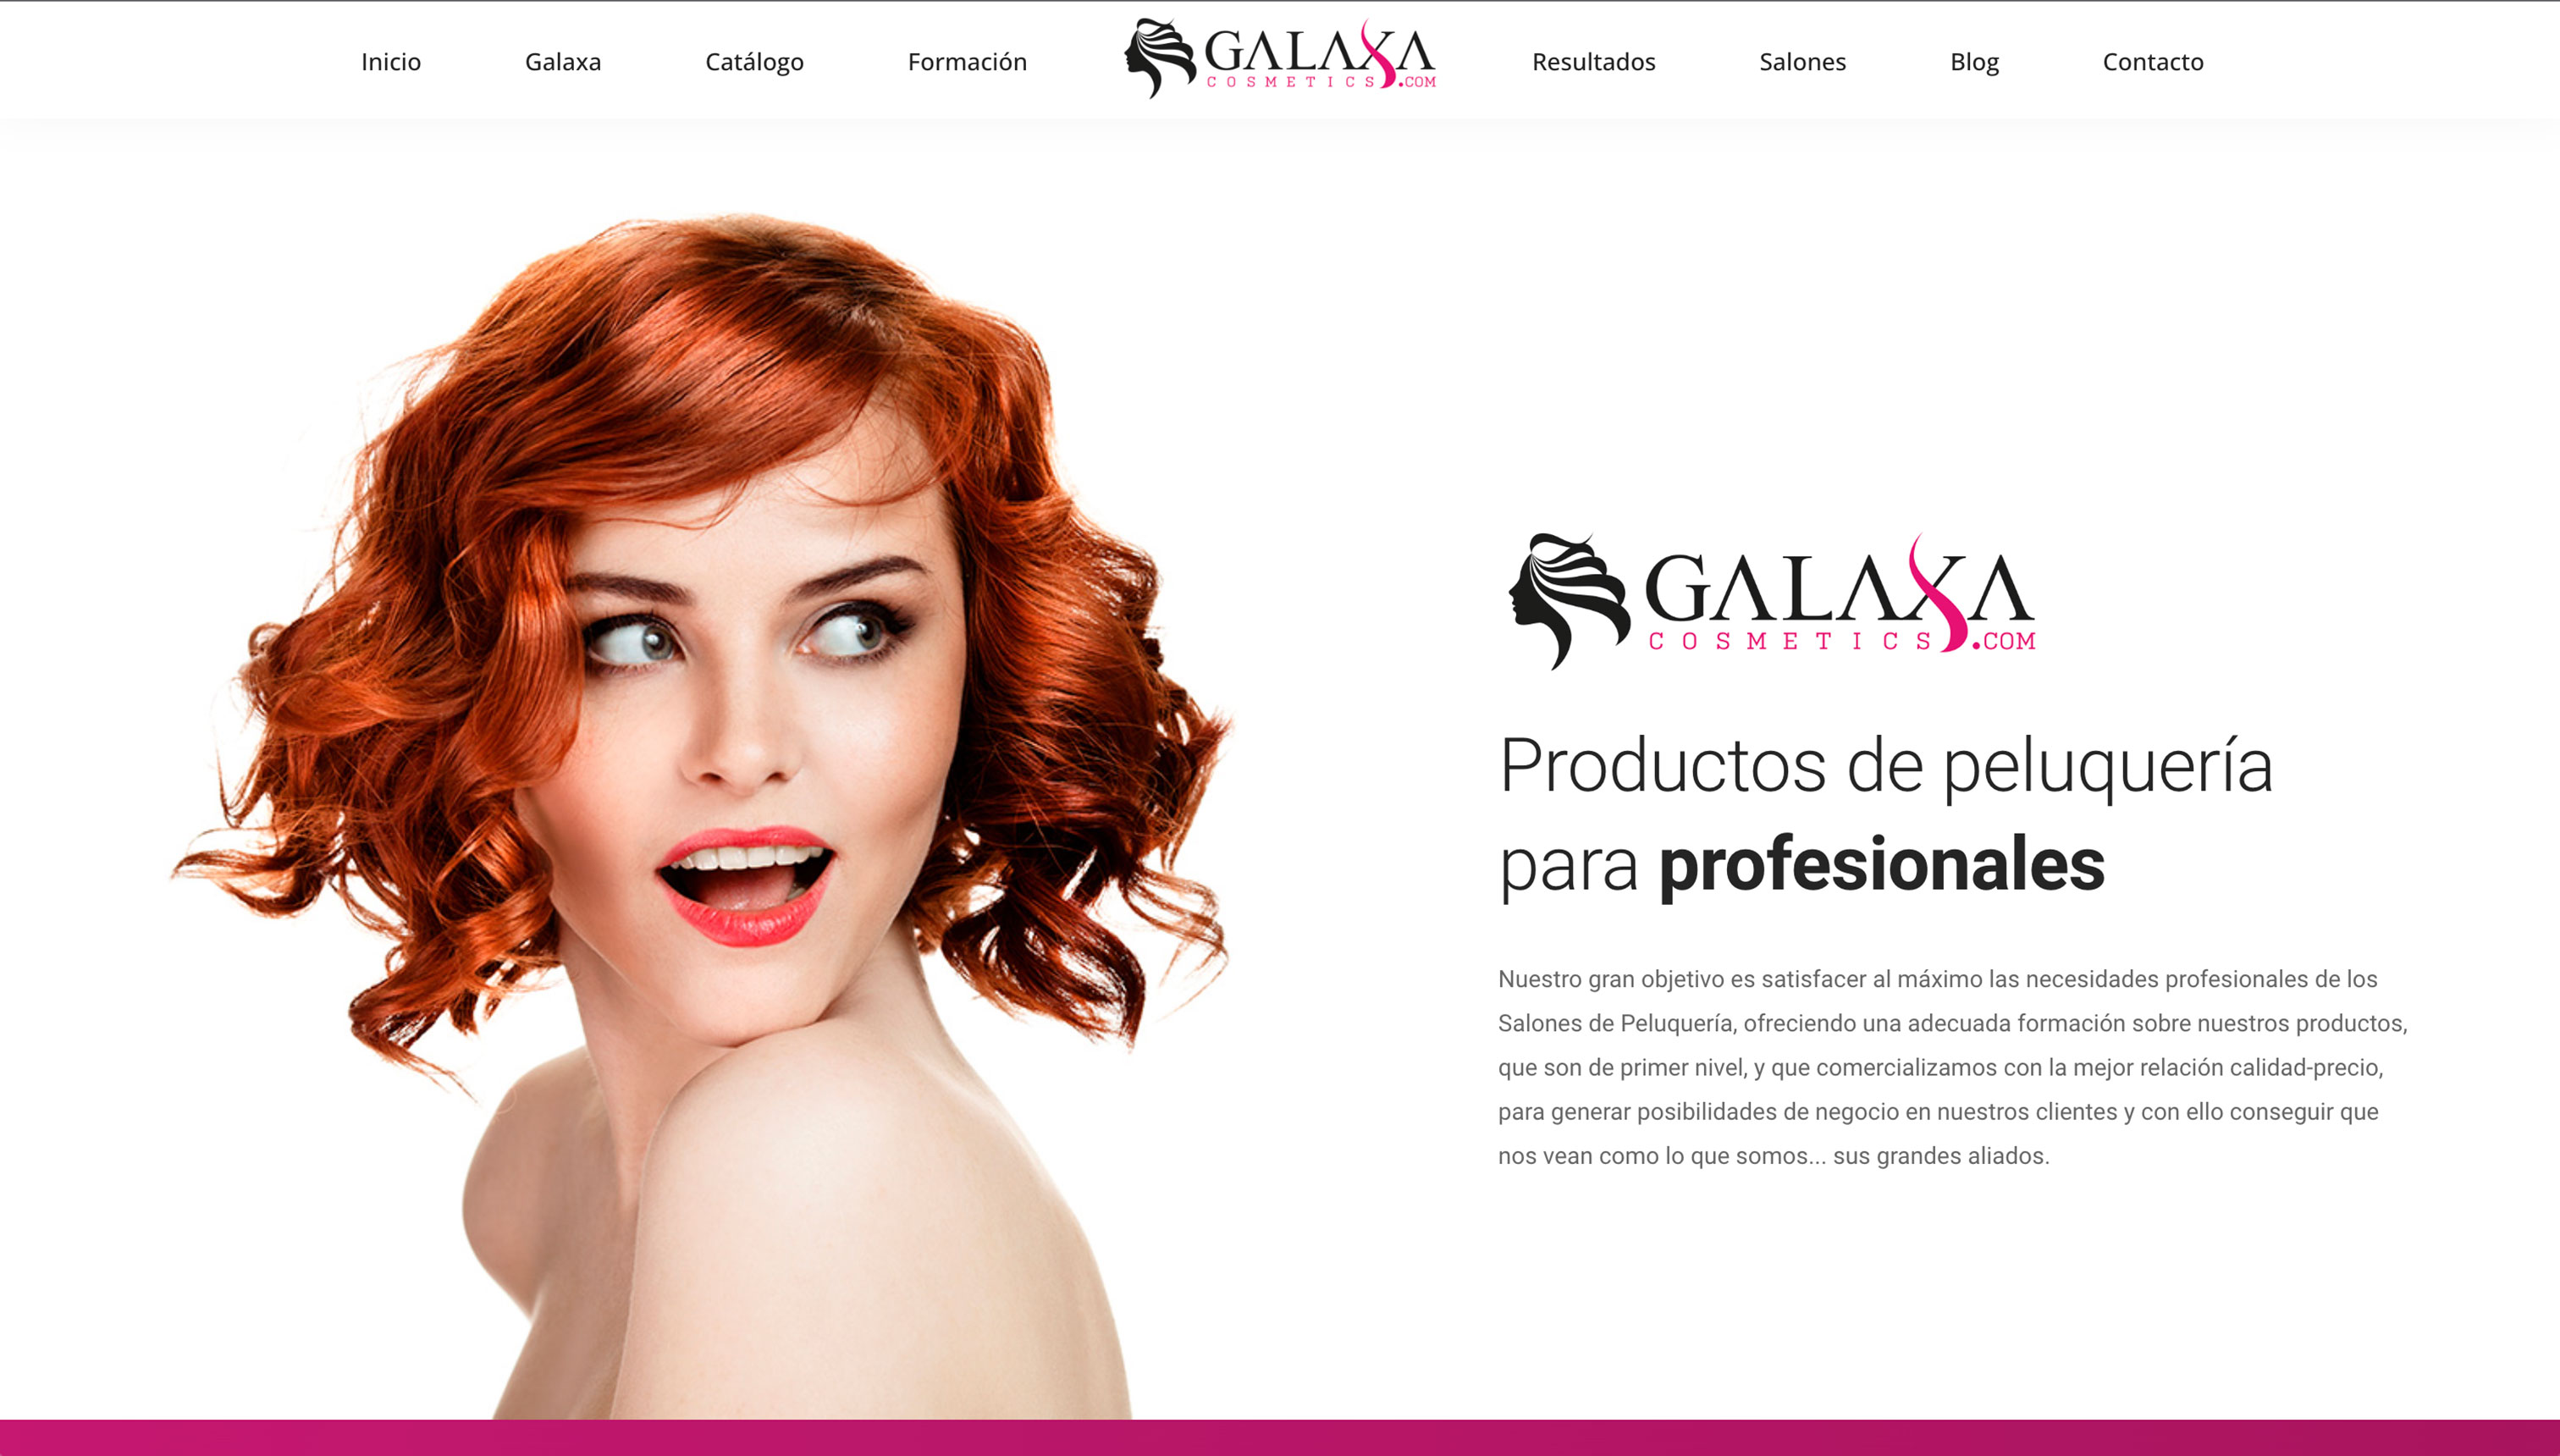 Galaxa Cosmetics - Productos de peluqueria